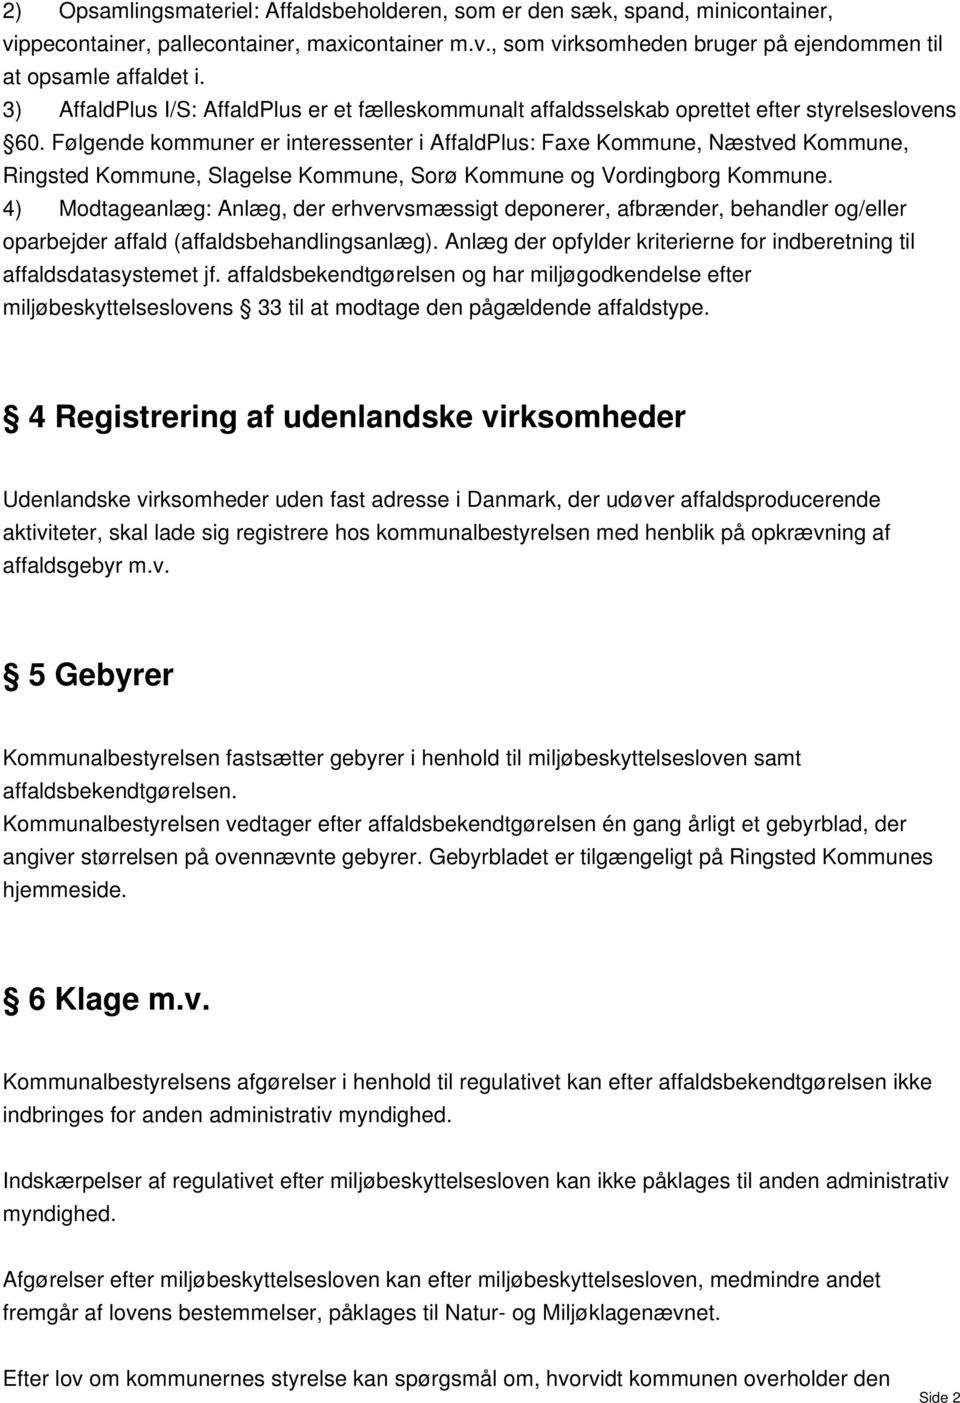 Følgende kommuner er interessenter i AffaldPlus: Faxe Kommune, Næstved Kommune, Ringsted Kommune, Slagelse Kommune, Sorø Kommune og Vordingborg Kommune.